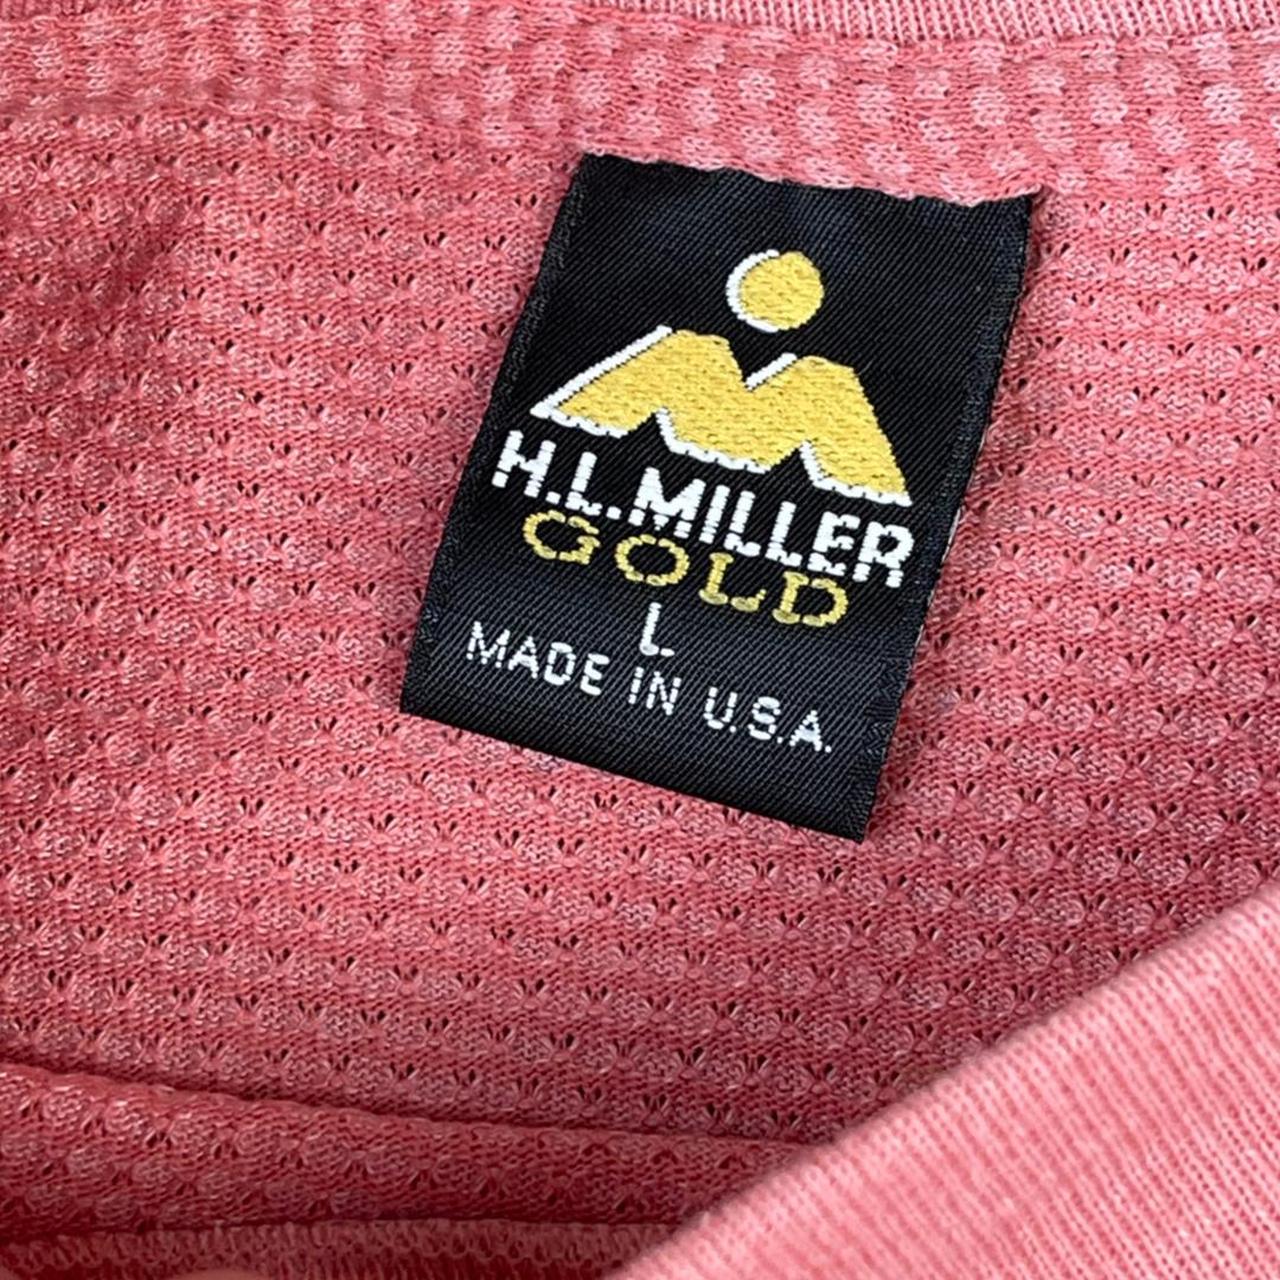 Very Rare H.L Miller Gold sweatshirt very nice